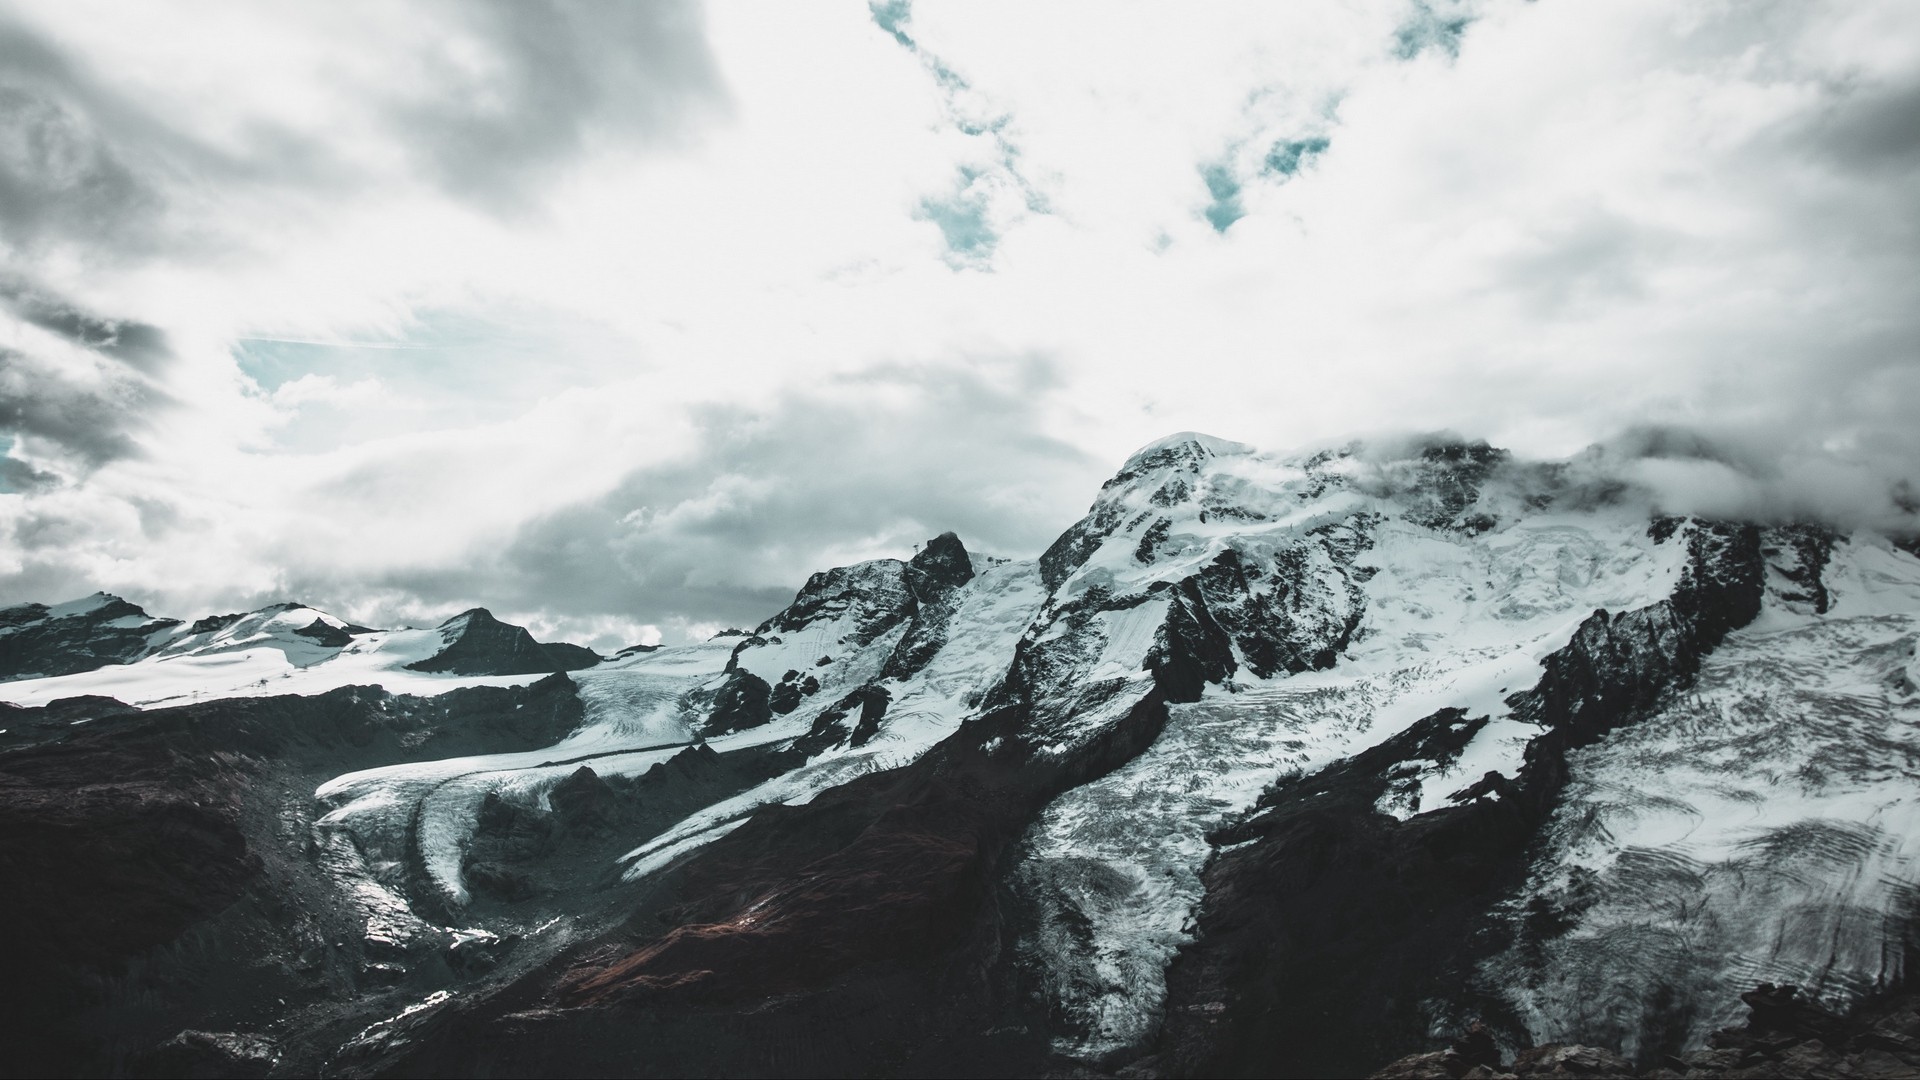 1920x1080 wallpapers: zermatt, switzerland, mountains, peaks, amazing pic (image)